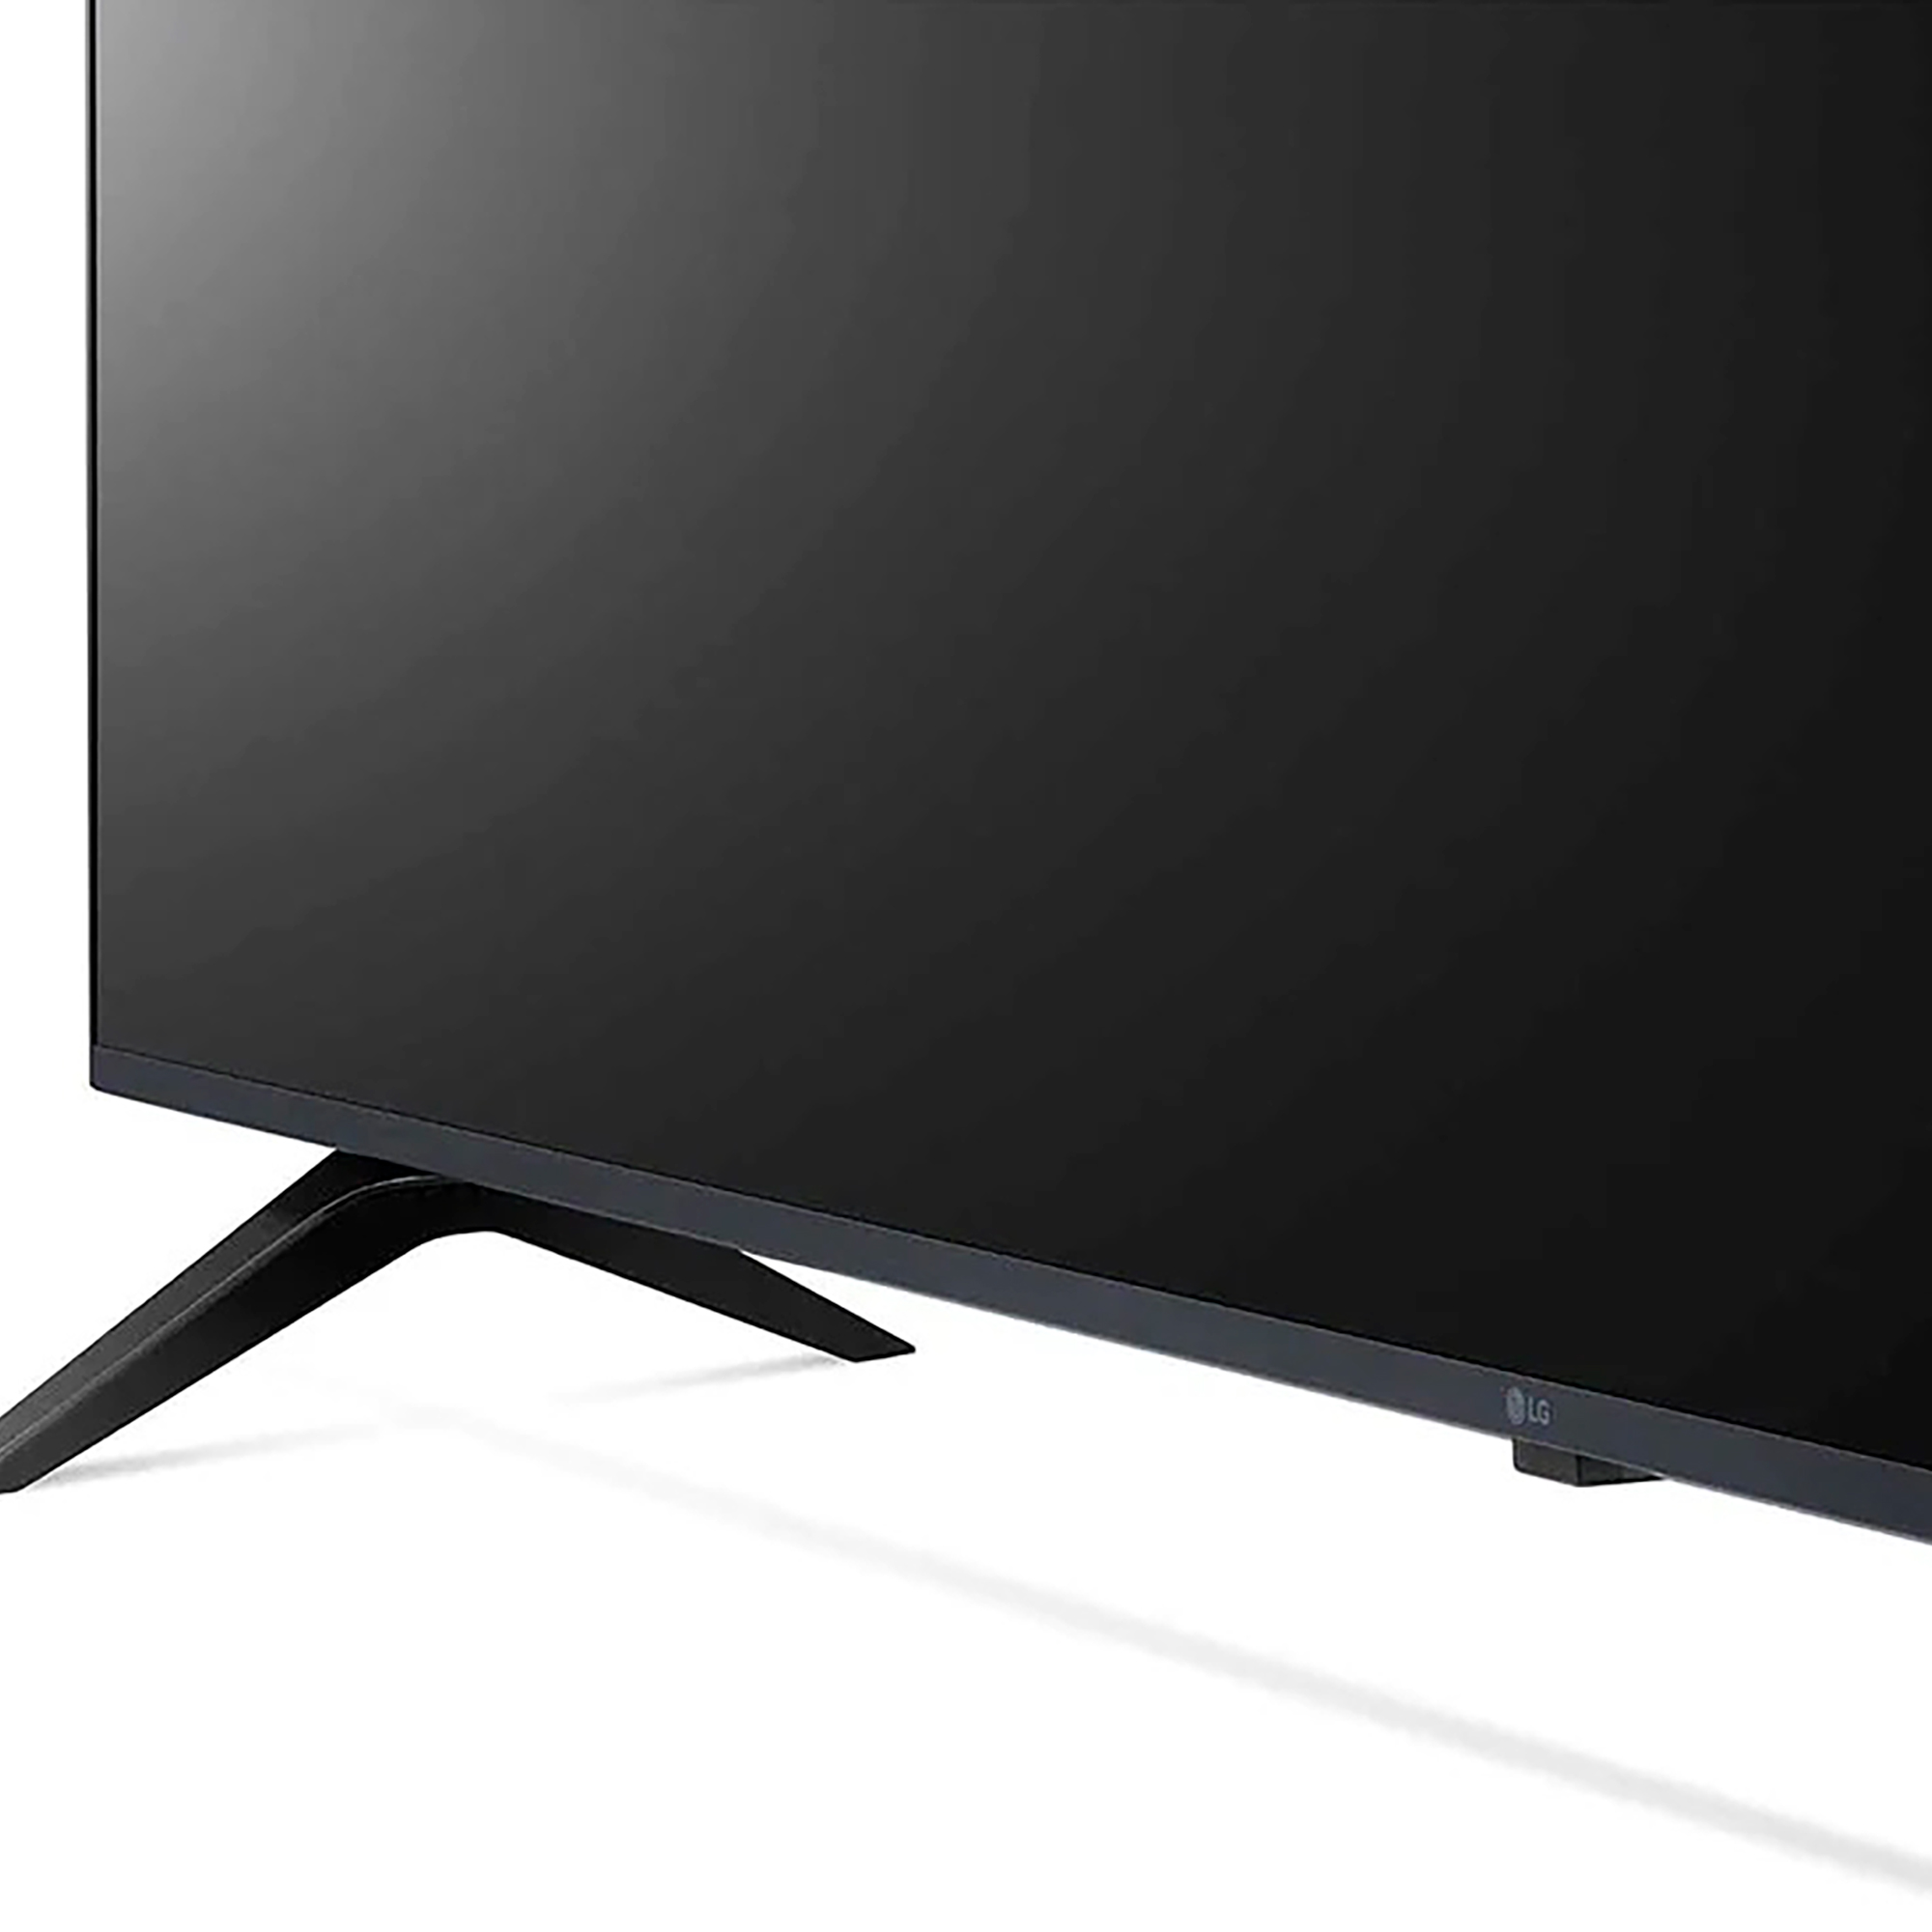 Televisor Smart TV 4K Westinghouse 60 - Multimax Store